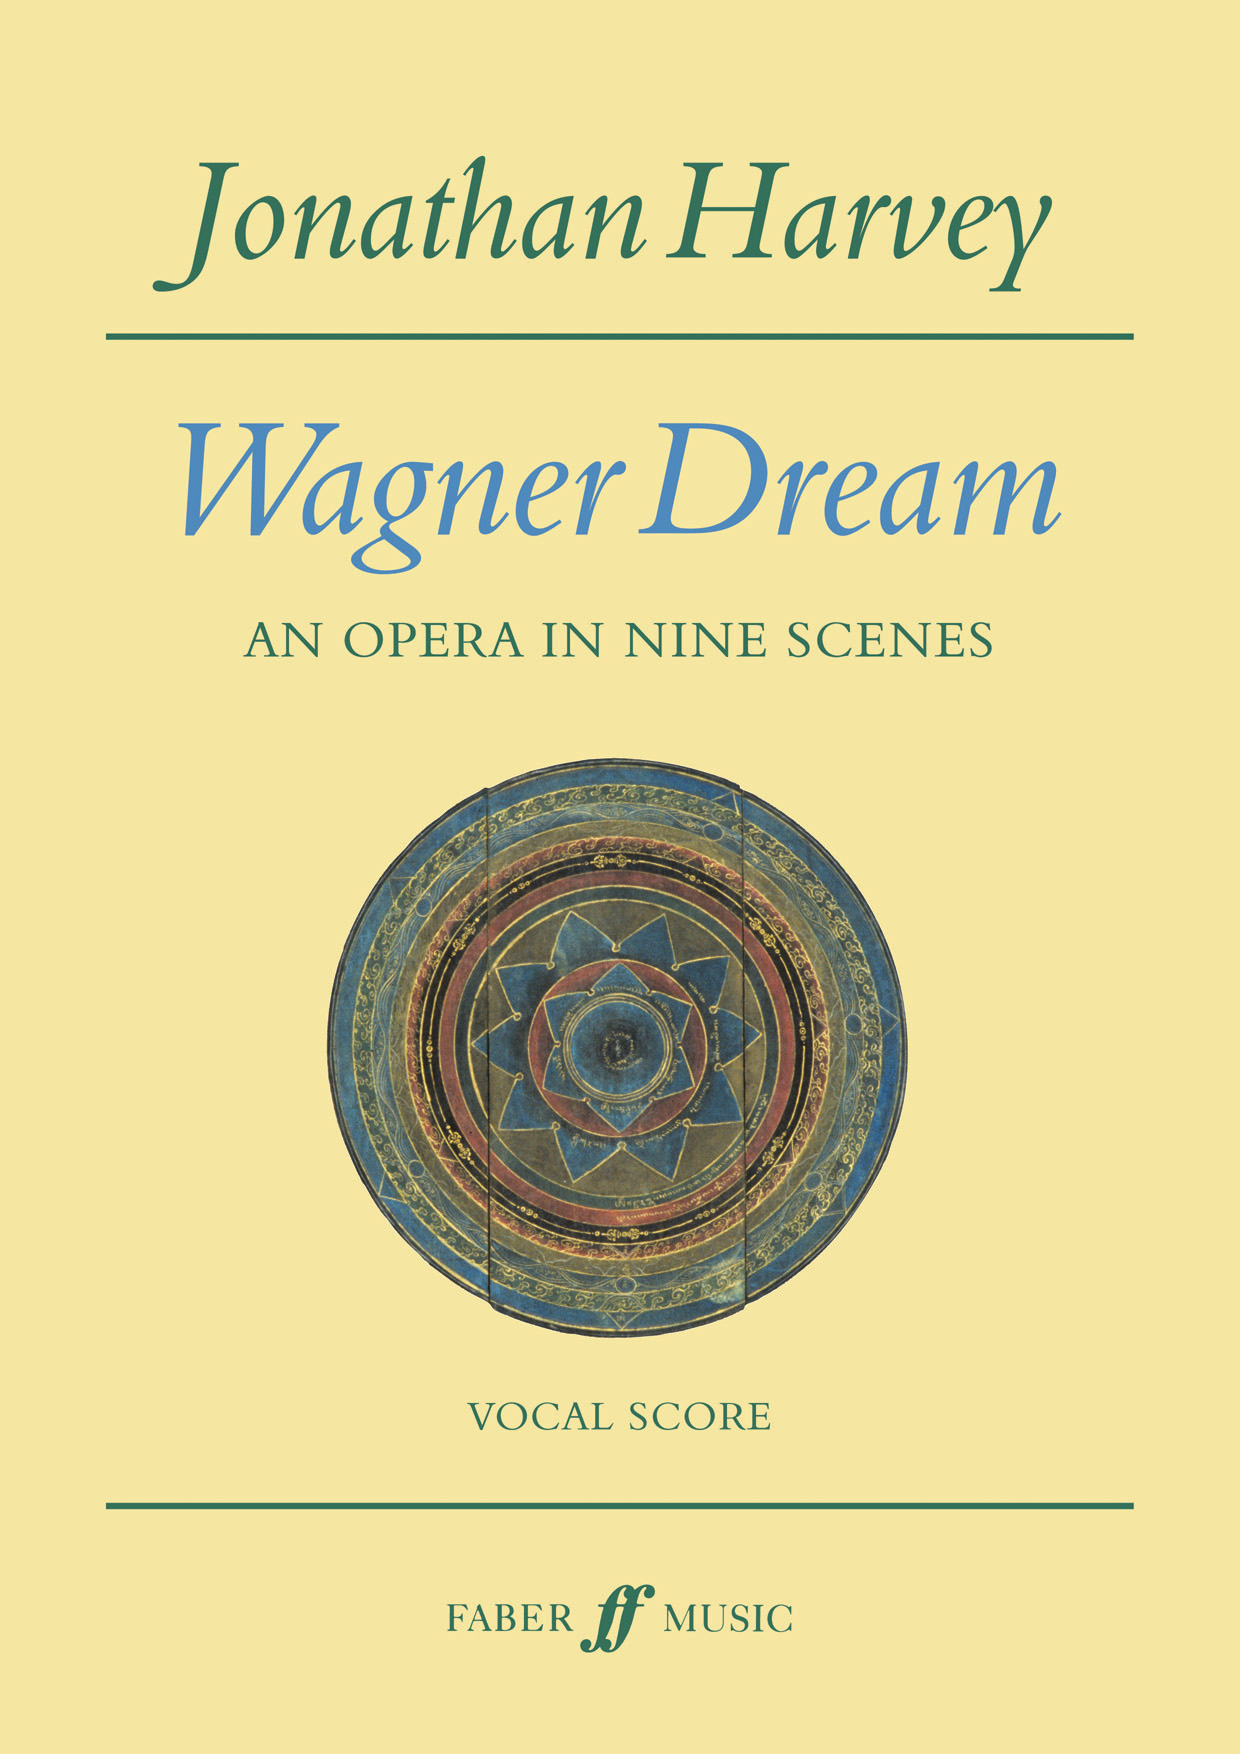 Wagner Dream (HARVEY JONATHAN)